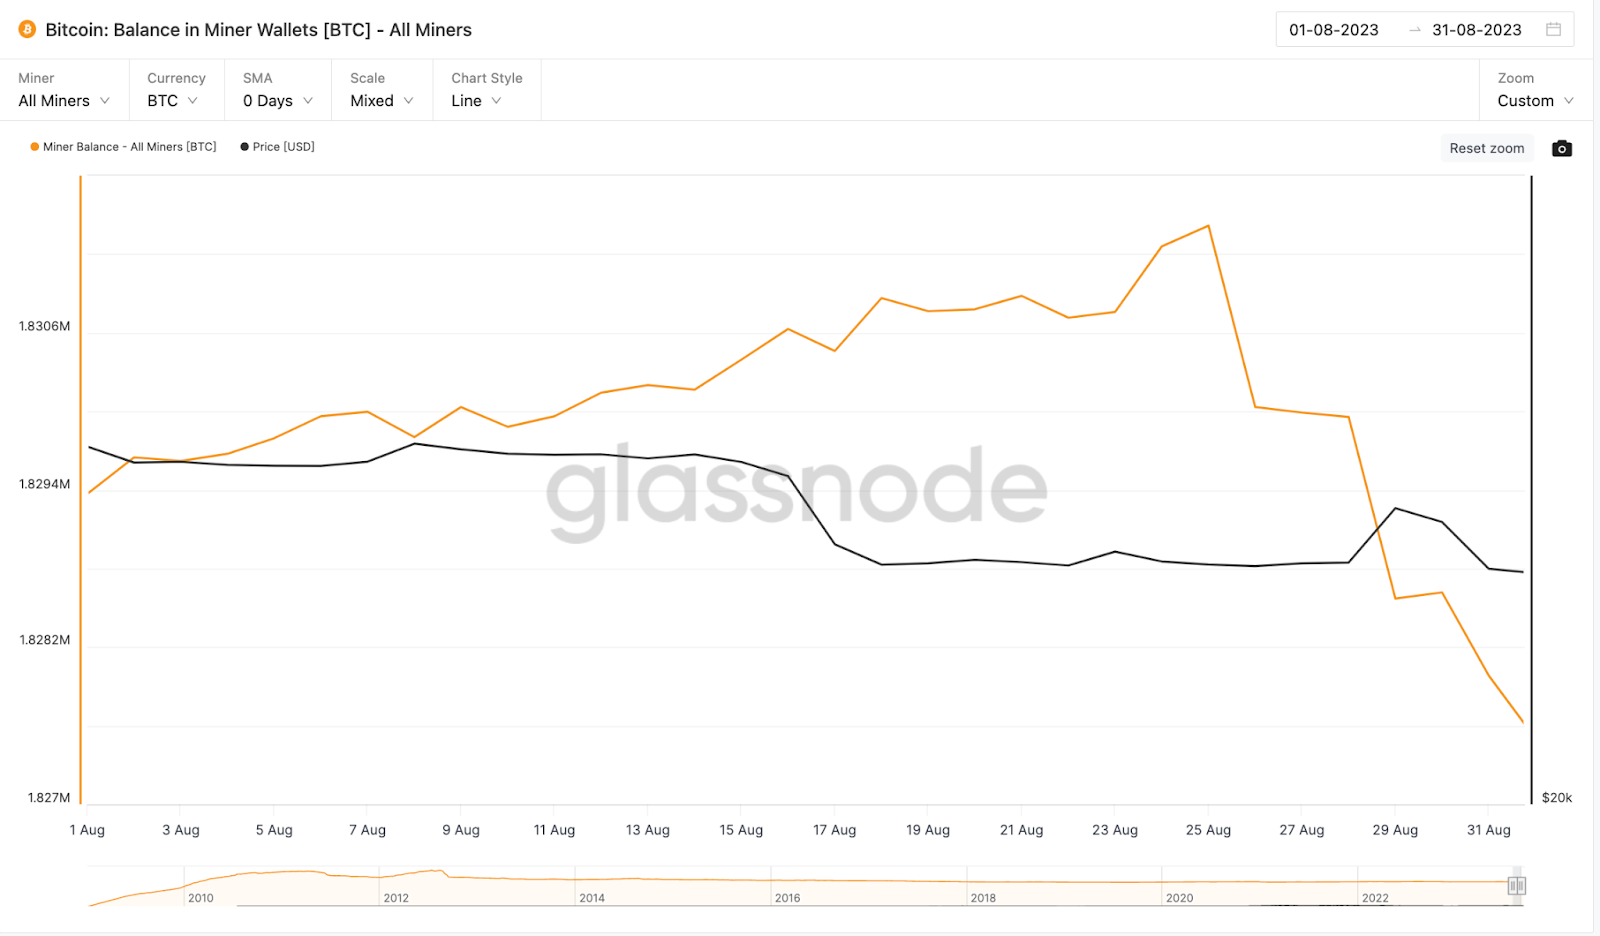 Bitcoin balance in miner wallets. Source: Glassnode